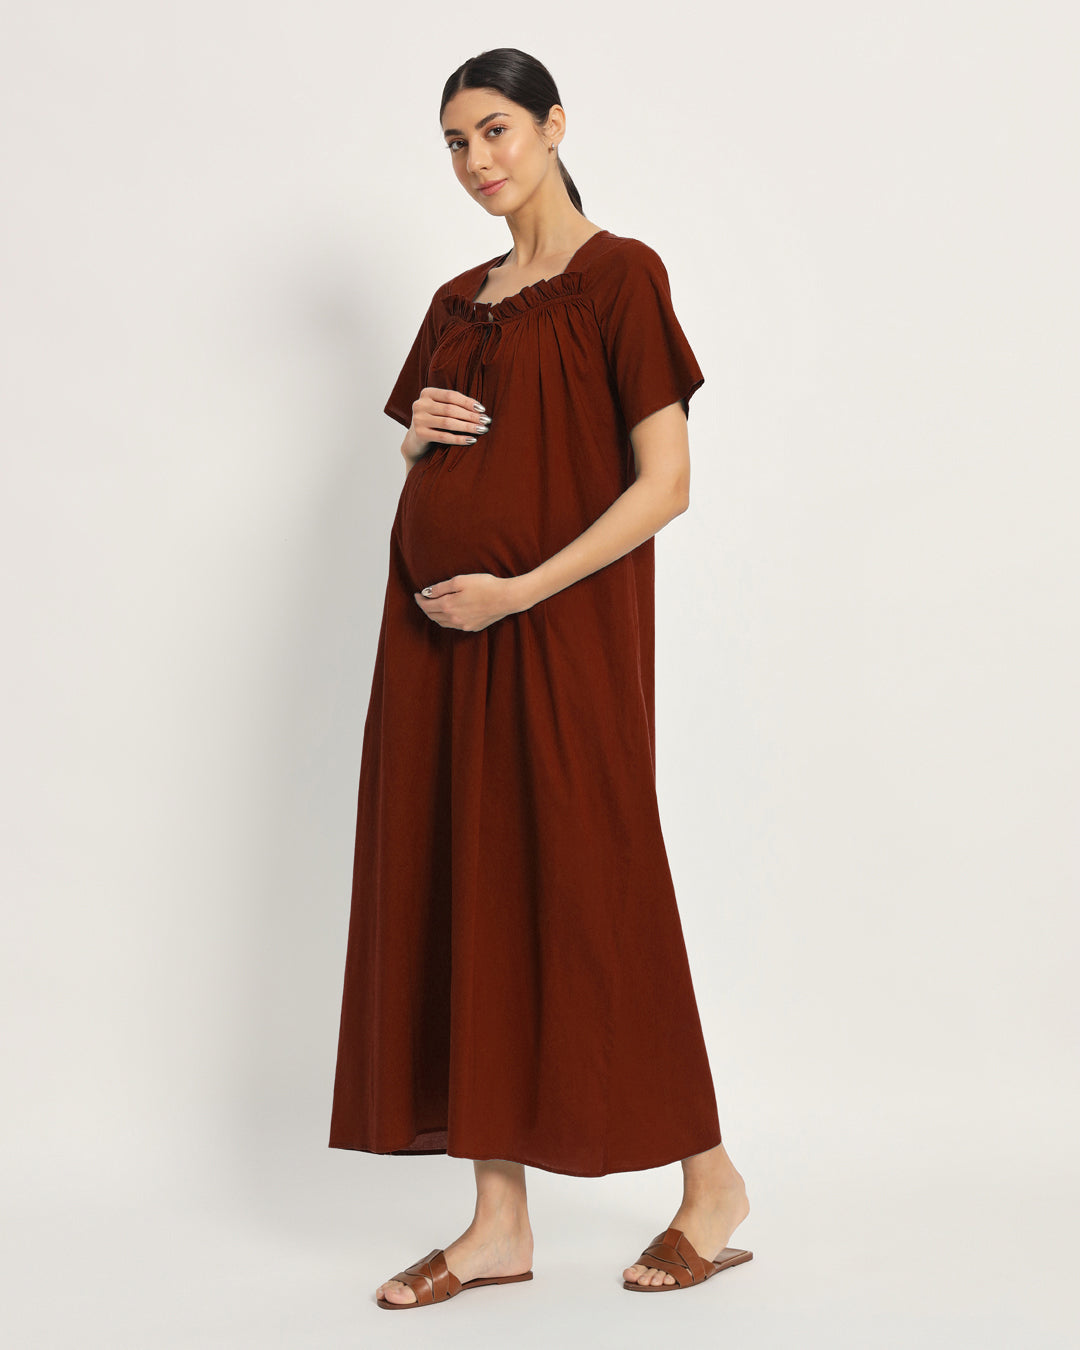 Combo: Russet Red & Sage Green Nurture N' Shine Maternity & Nursing Dress